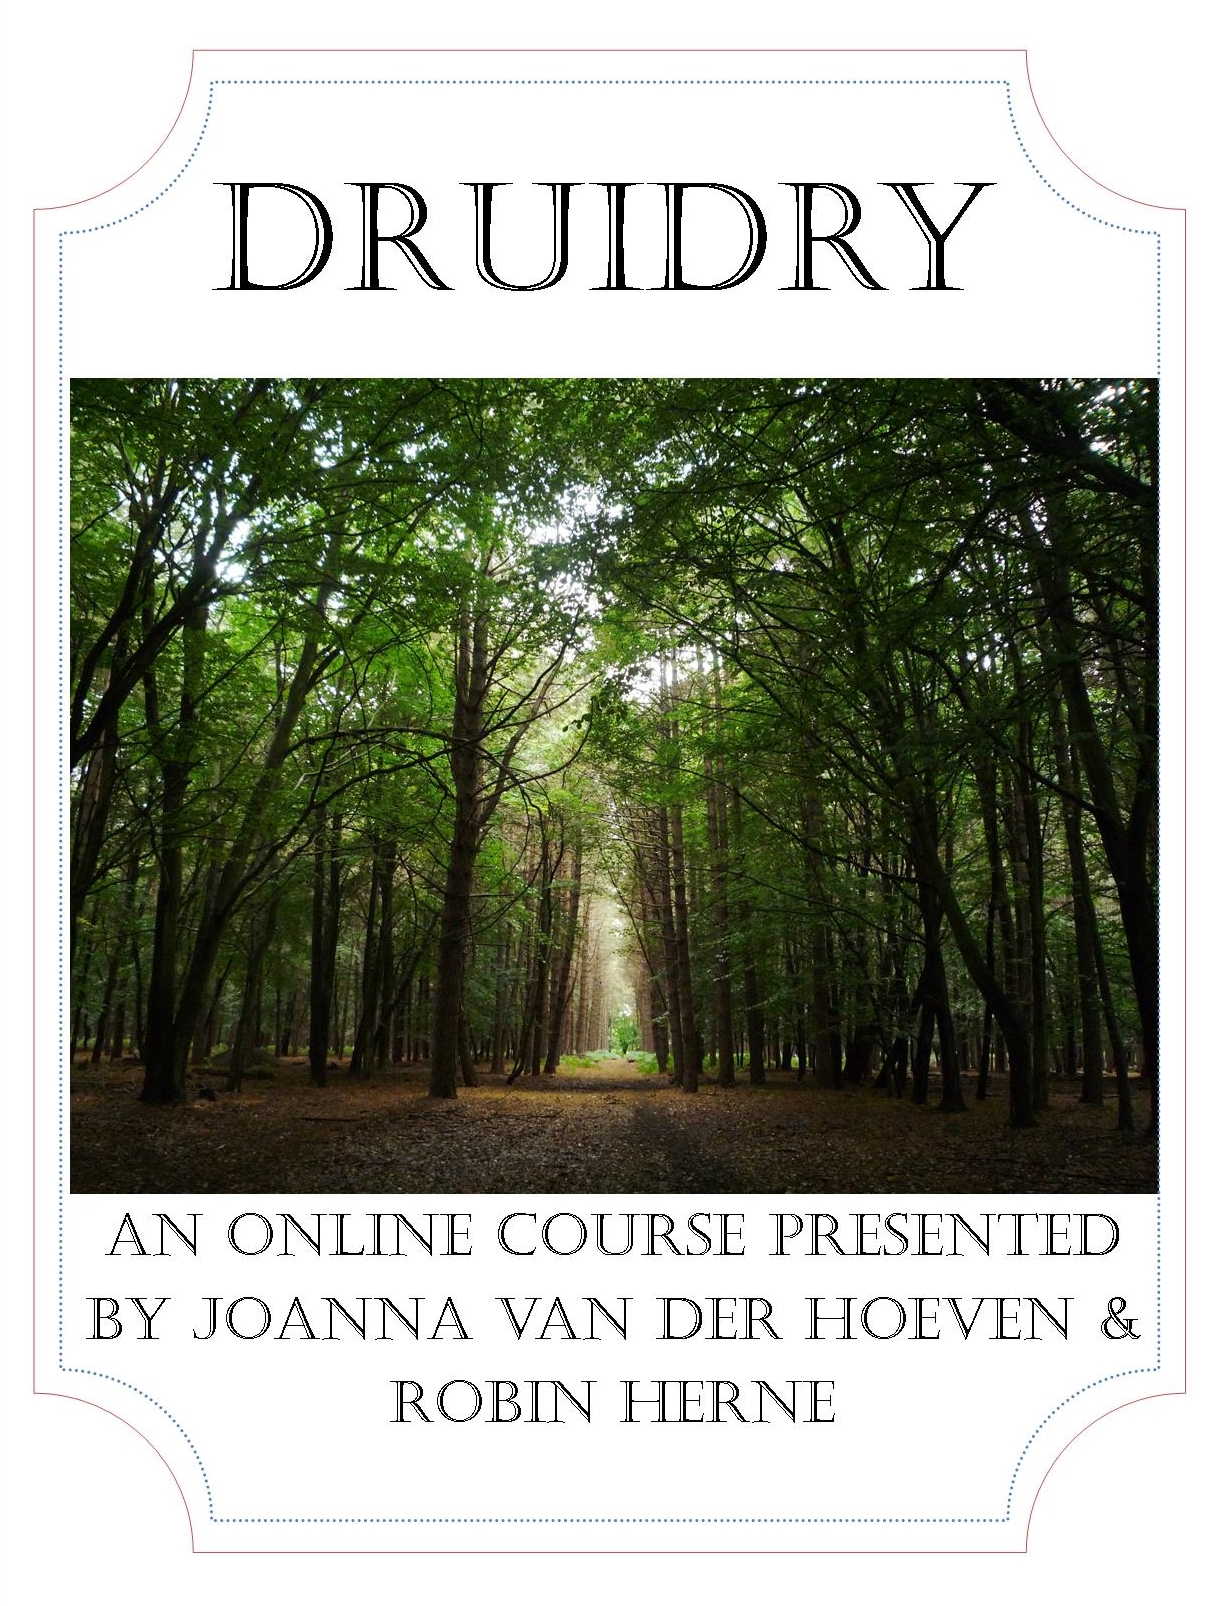 Druidry Course Photo